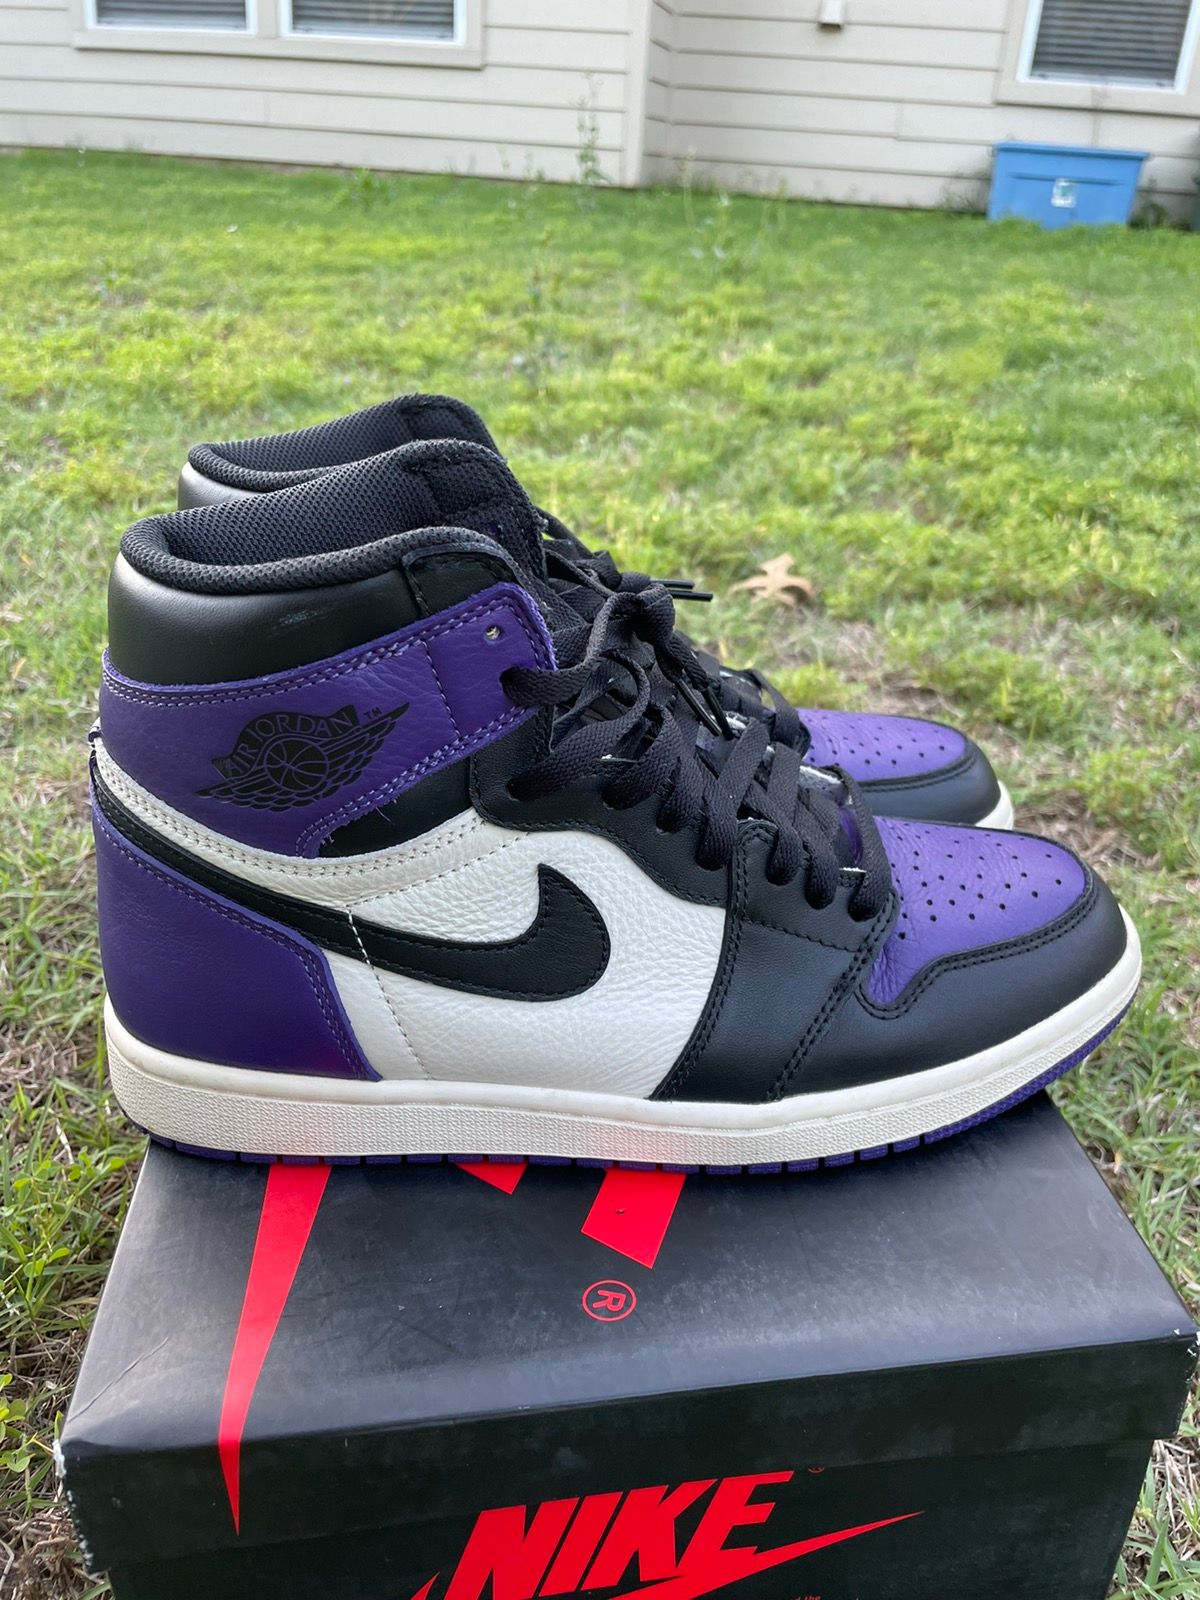 Pre-owned Jordan Brand Nike Jordan 1 Retro Court Purple 1.0 Shoes In Black Purple White